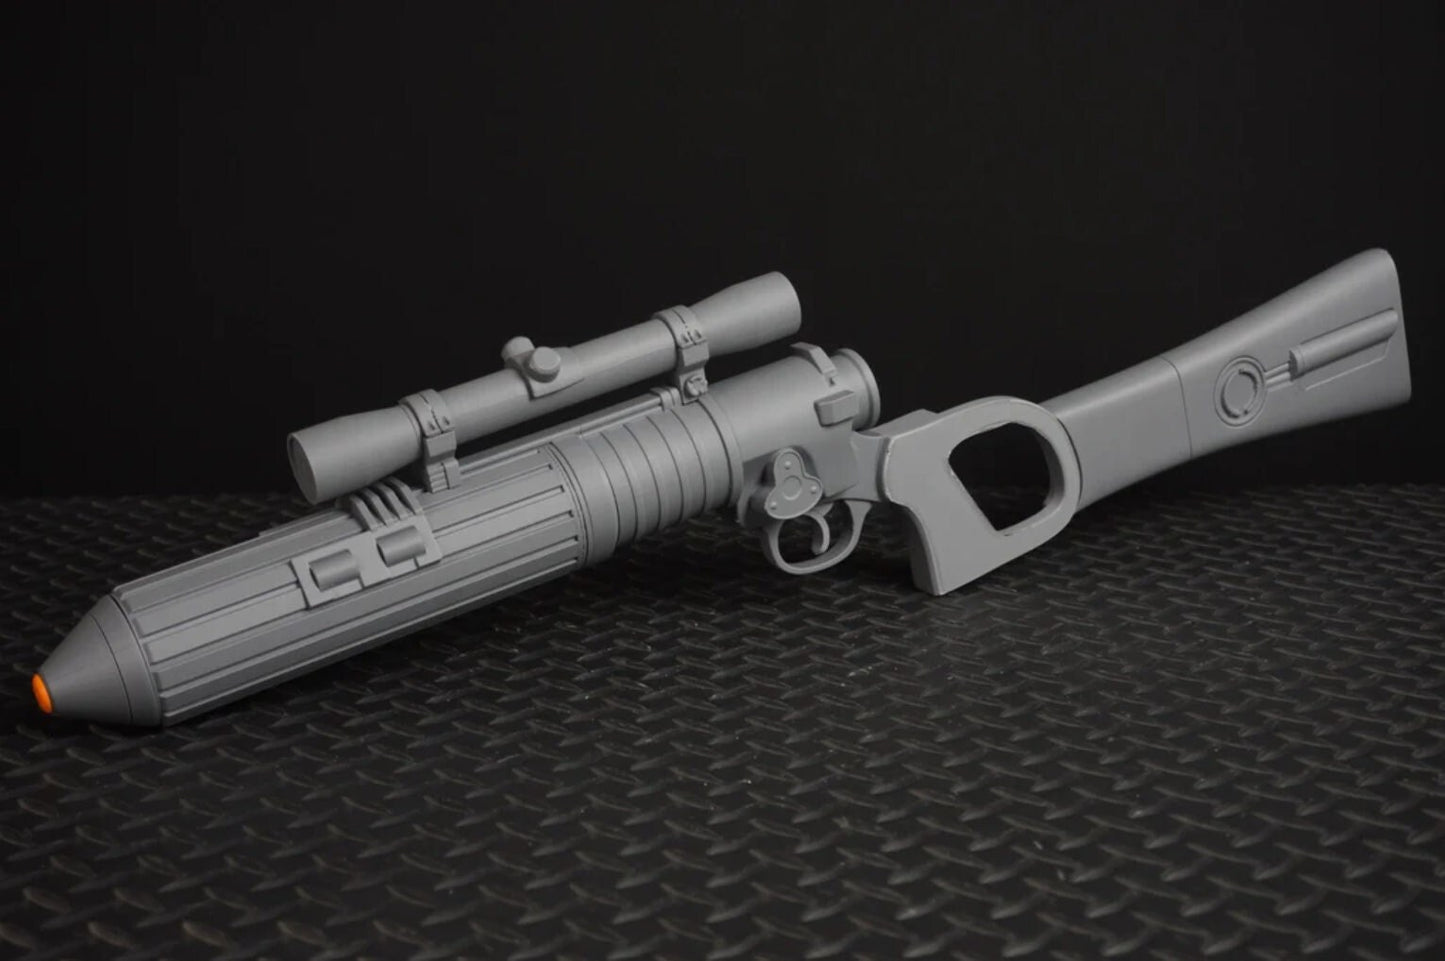 Boba Fett EE3 Blaster Replica - 3D Printed Prop For Cosplay & Display